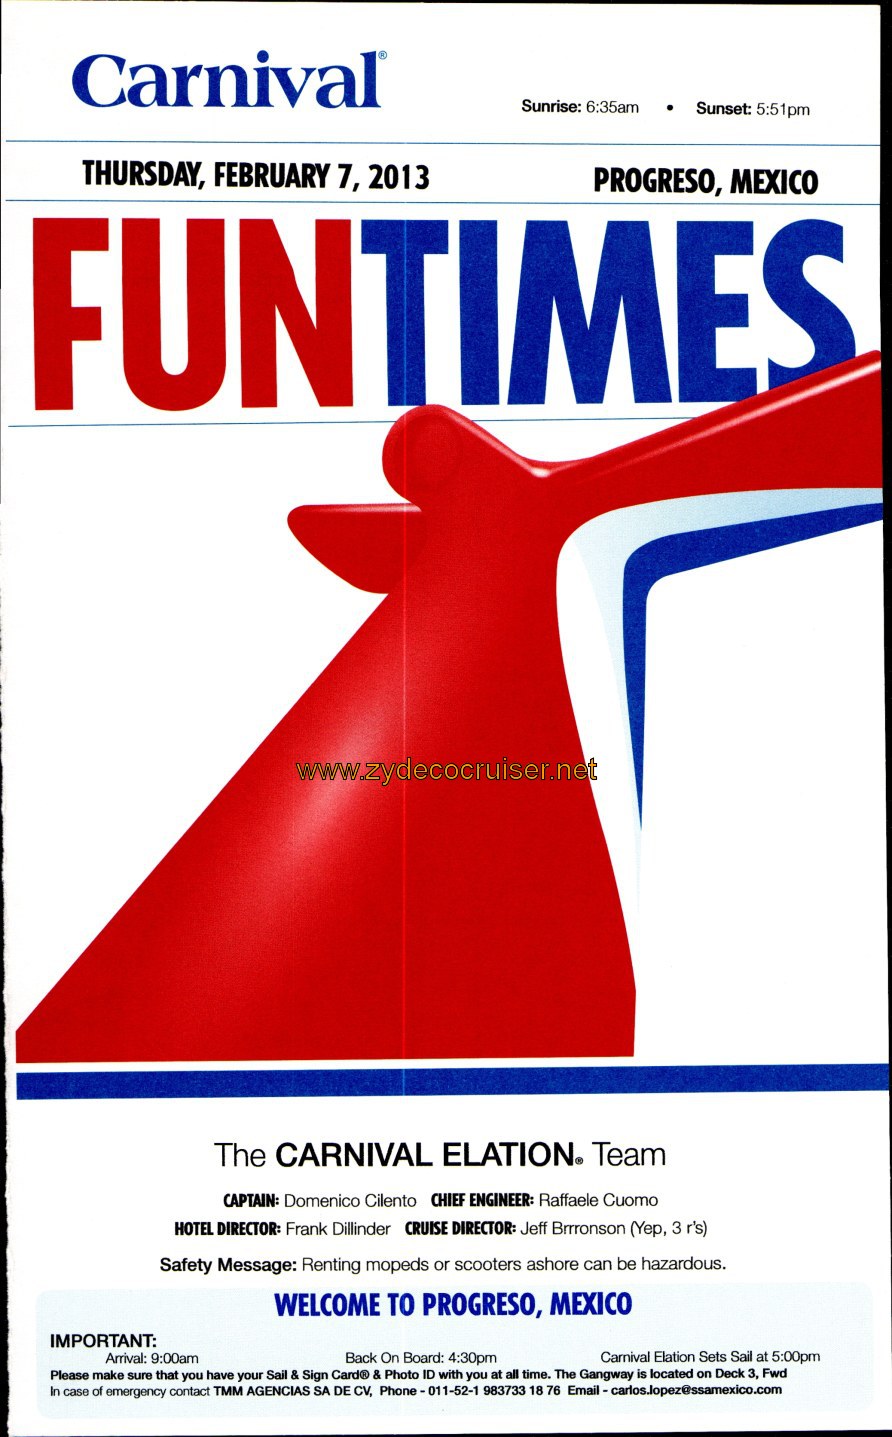 019: Carnival Elation 5 Day Fun Times, Feb 7, 2013, Page 1, 